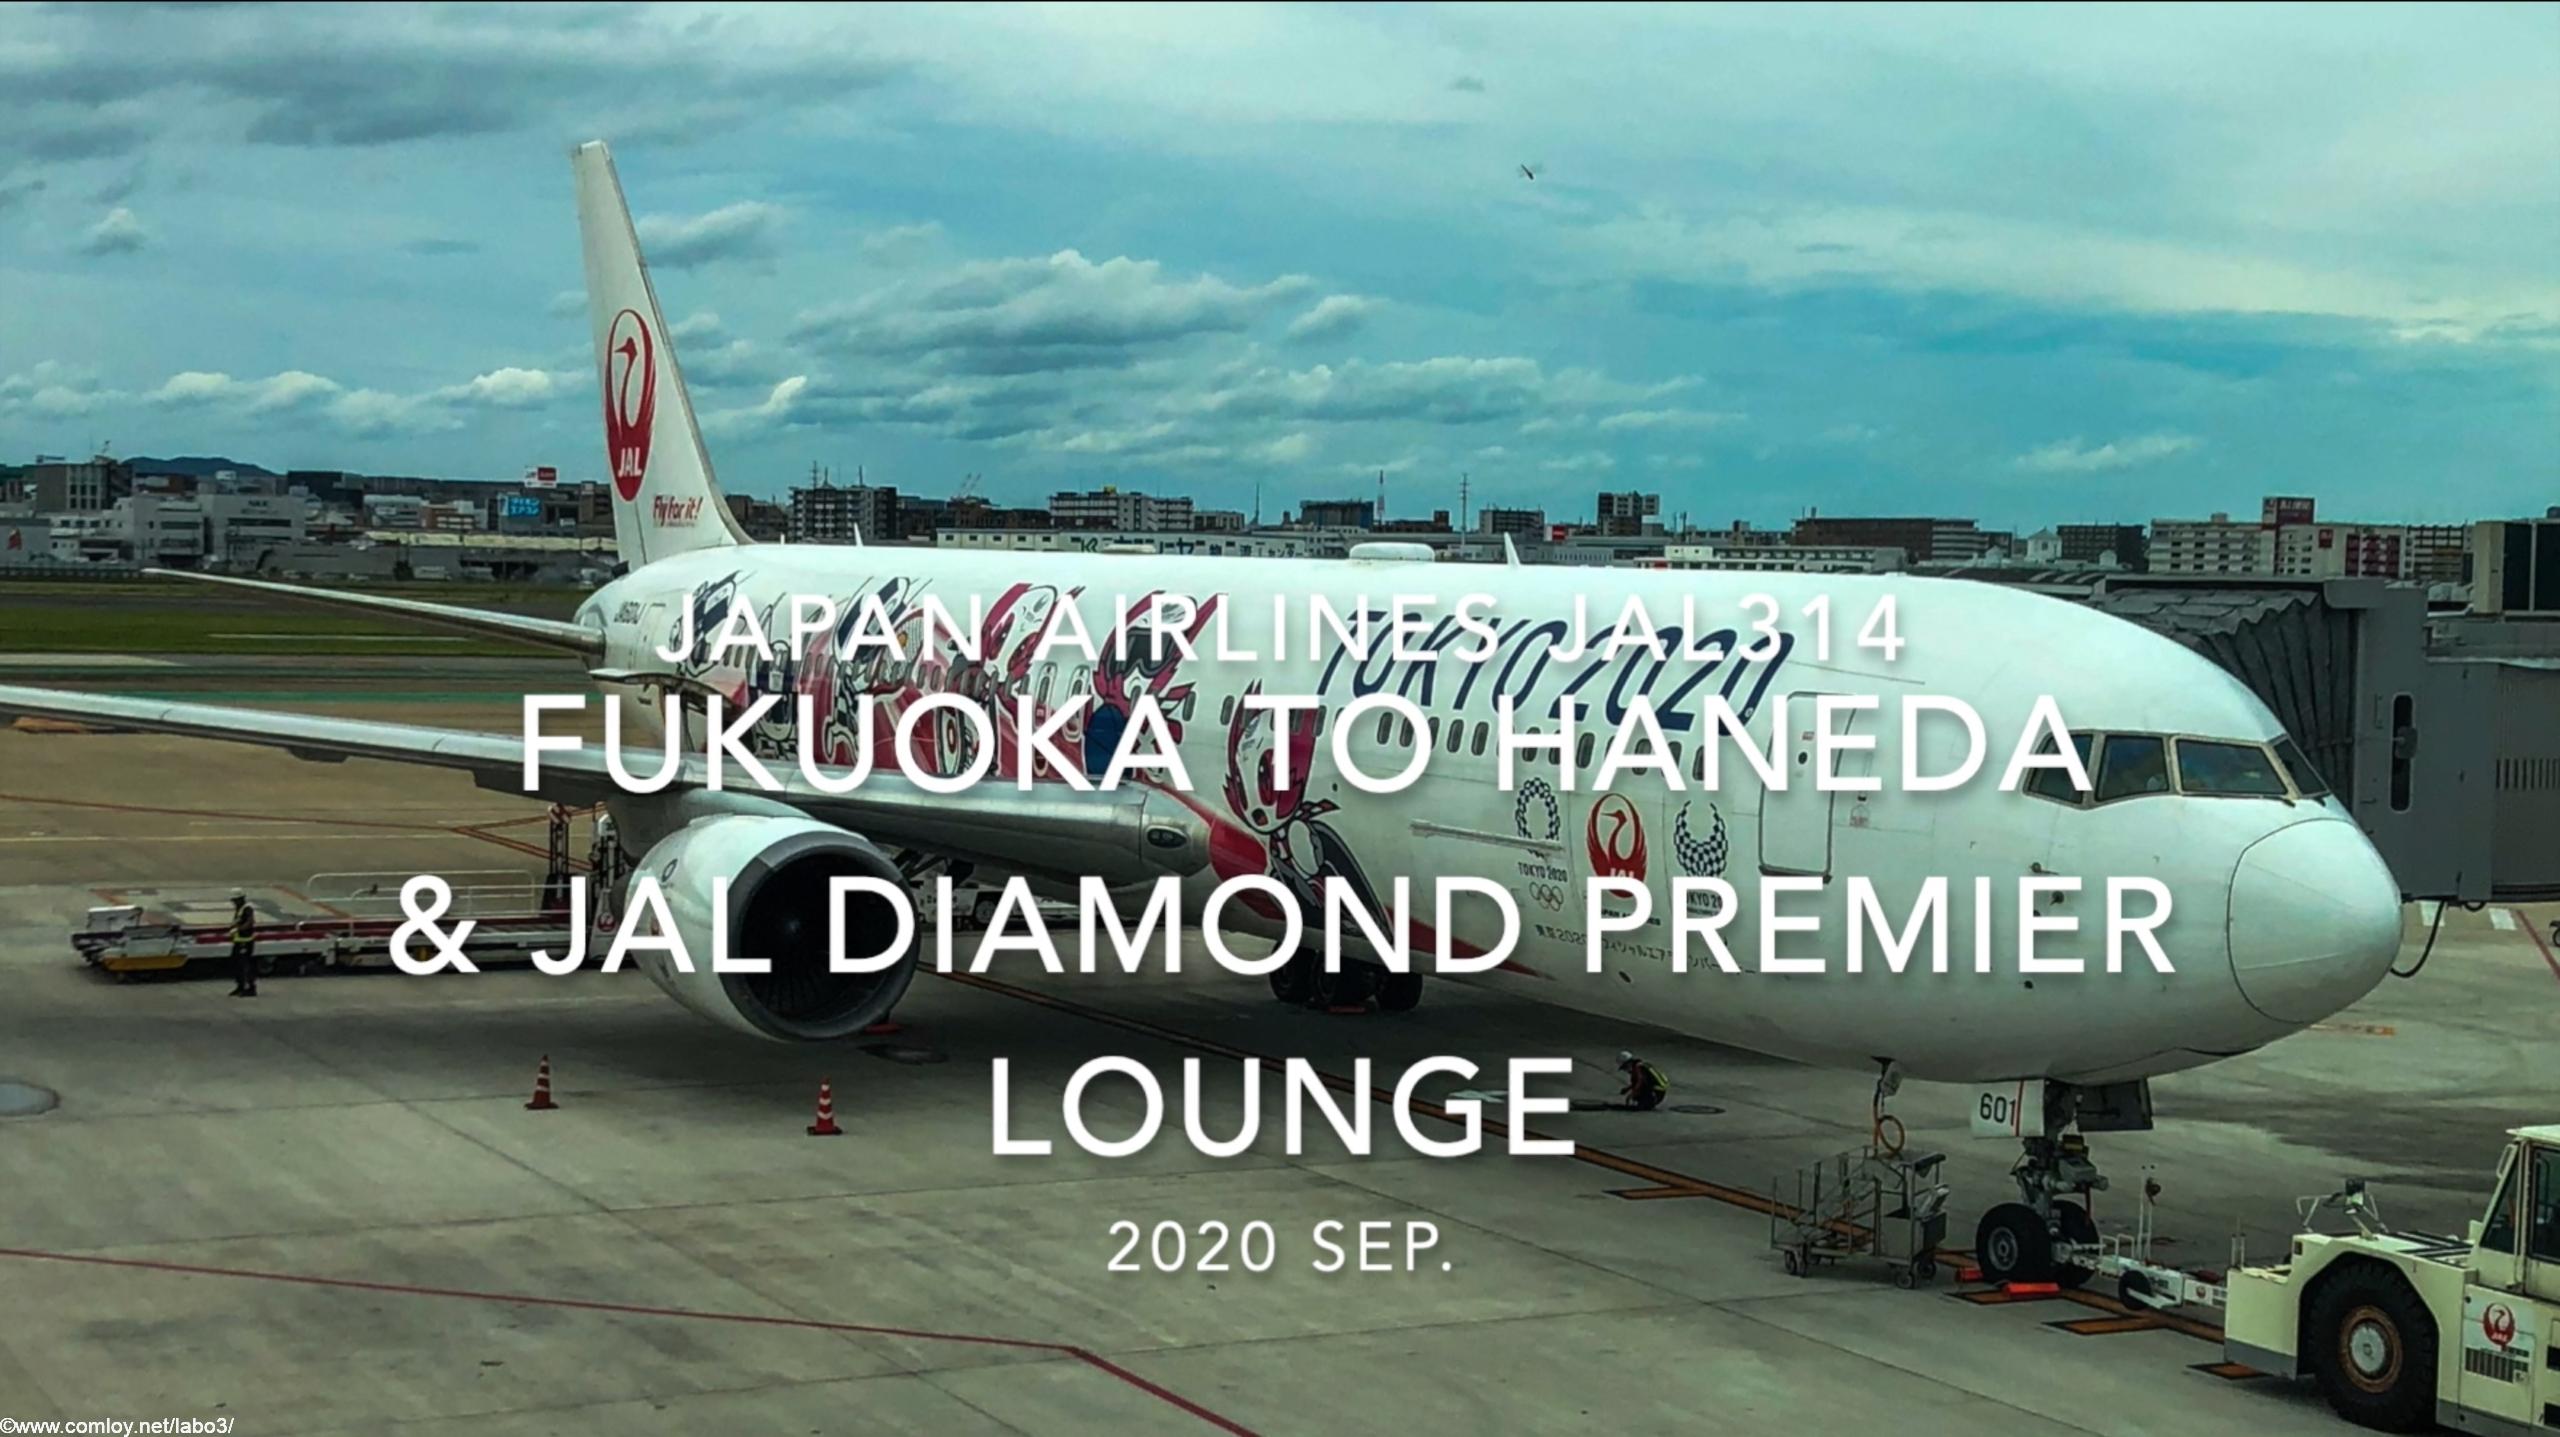 【Flight Report】2020 SEP Japan Airlines JAL314 FUKUOKA TO HANEDA and JAL DIAMOND PREMIER LOUNGE 日本航空 福岡 - 羽田 搭乗記